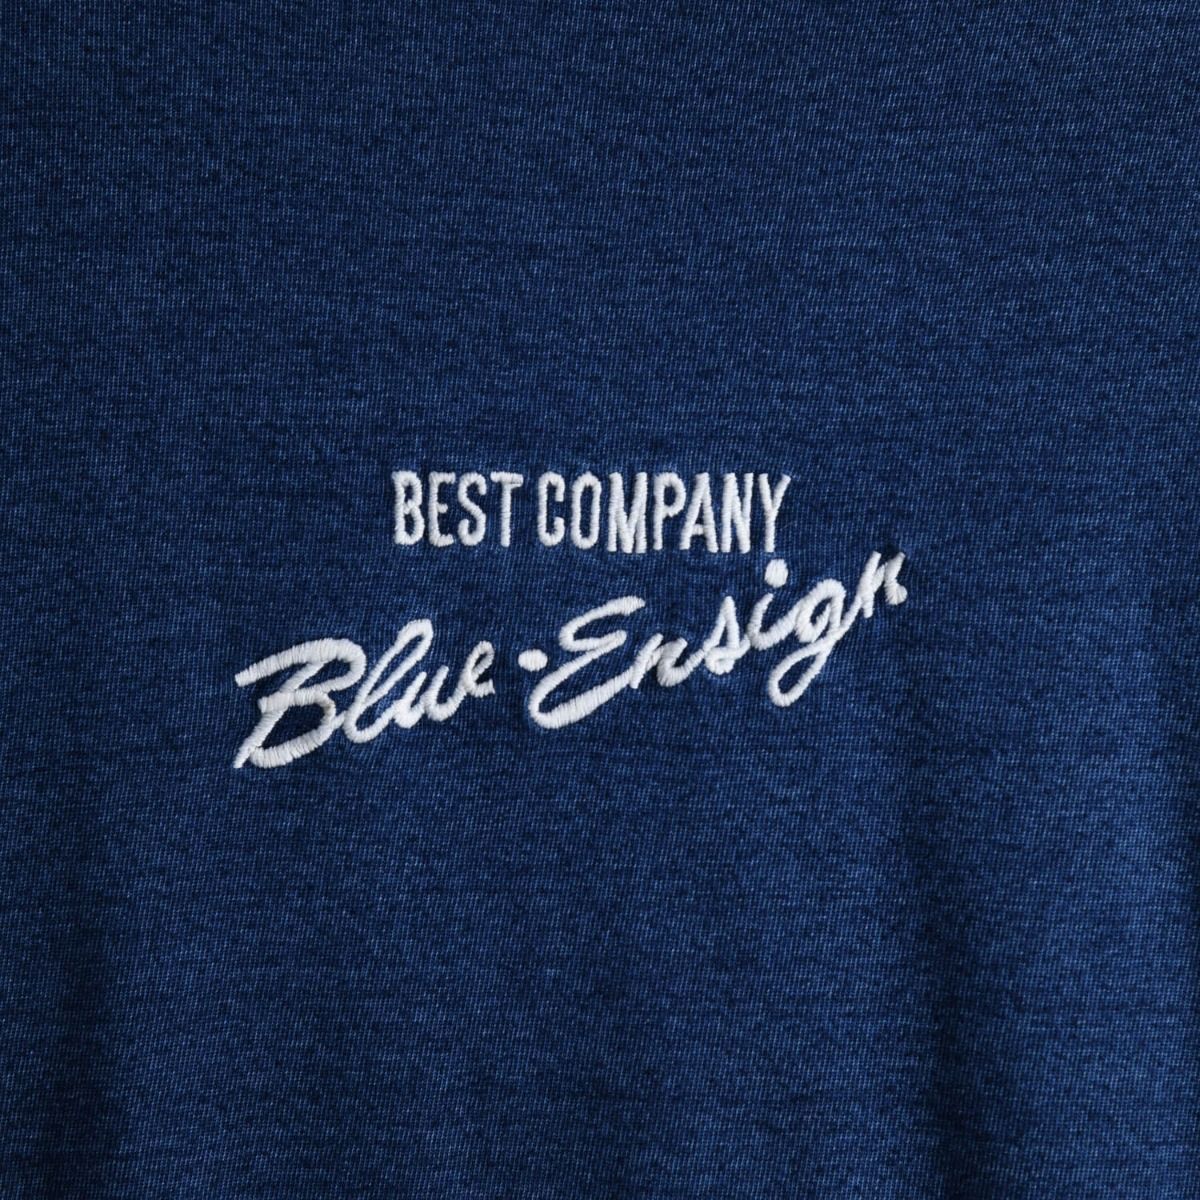 Best Company 1980s T-shirt